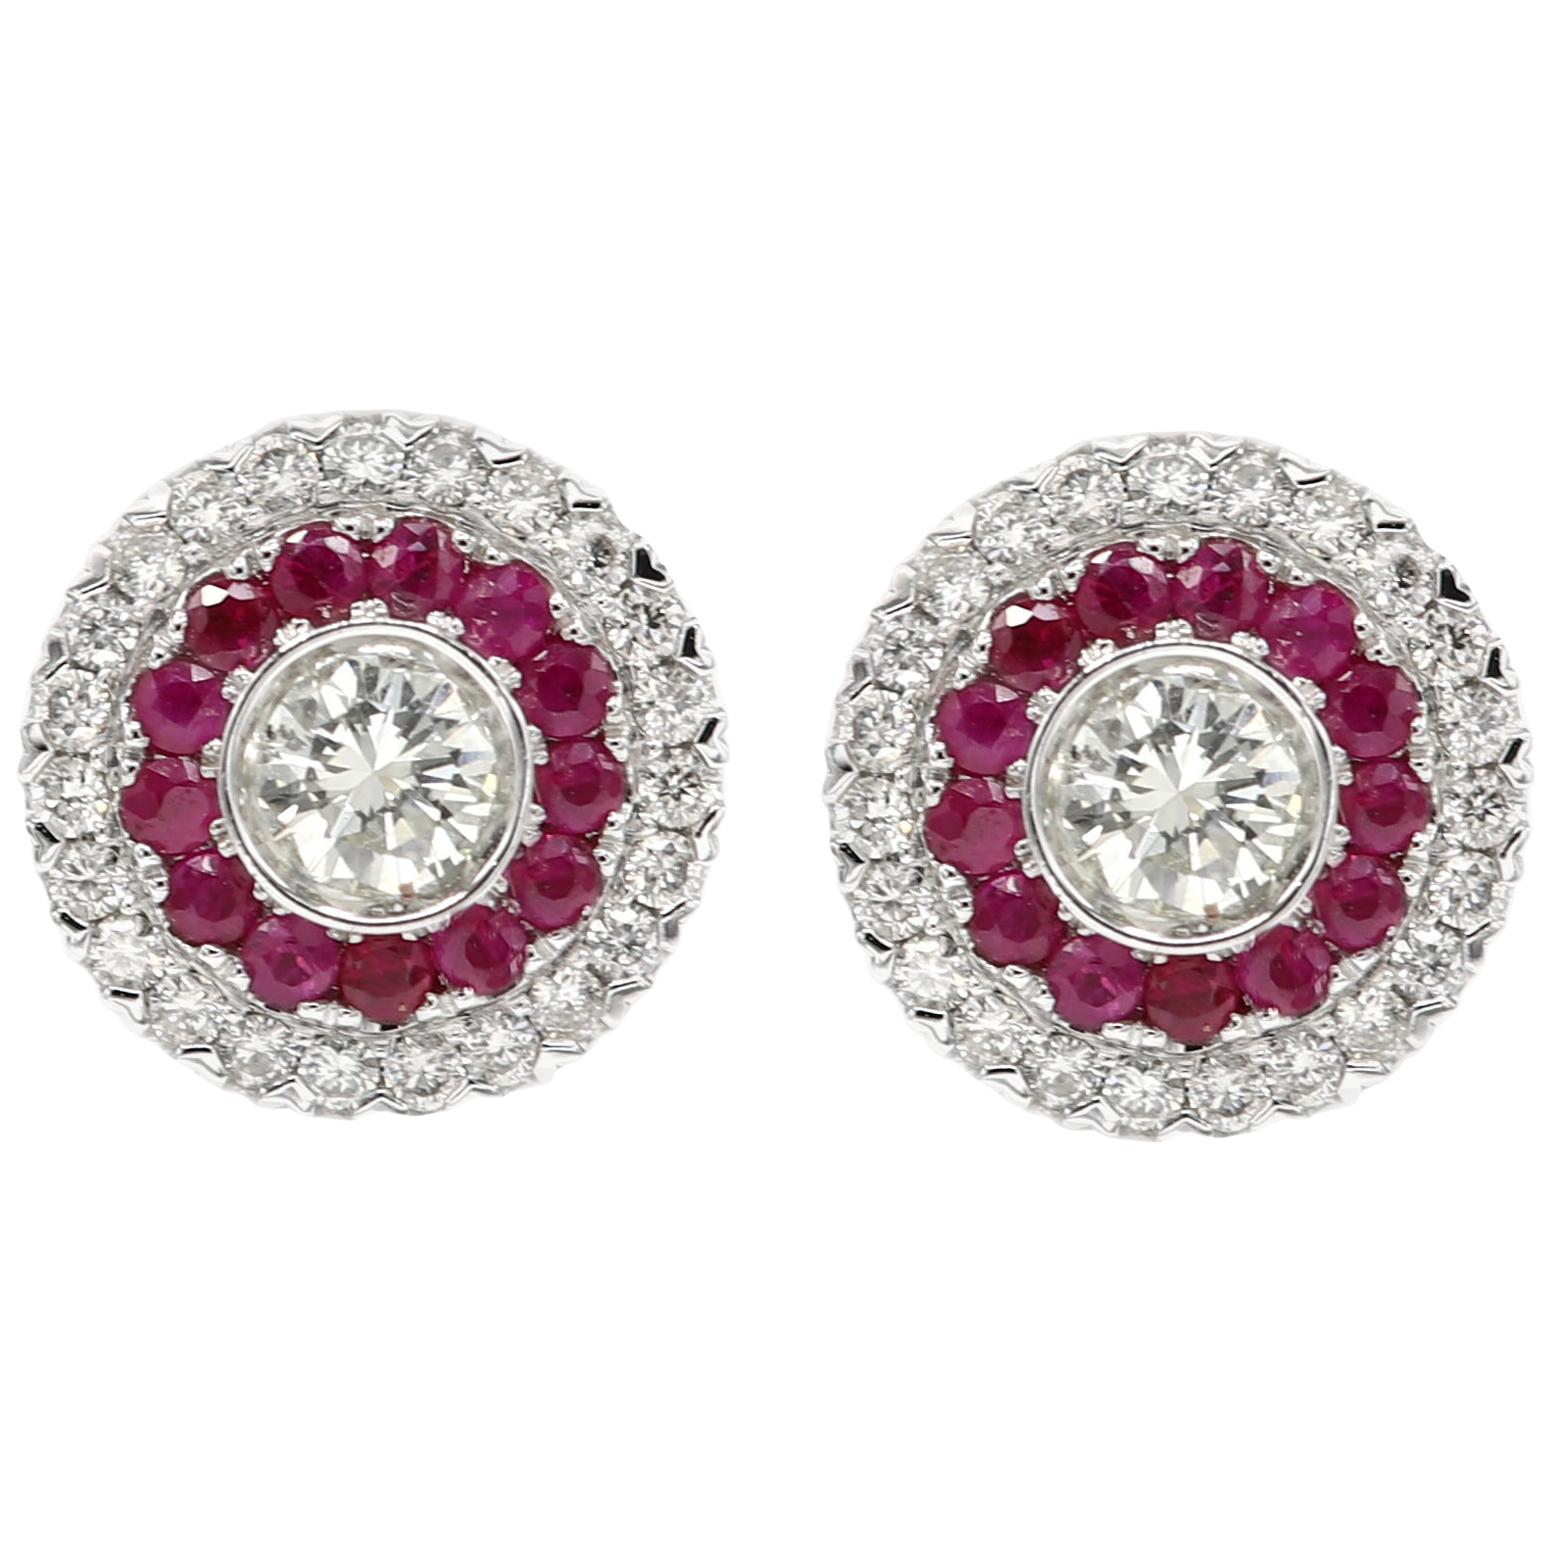 Art Deco Style Earring 18 Karat White Gold Diamonds & Ruby Earrings Large Studs For Sale